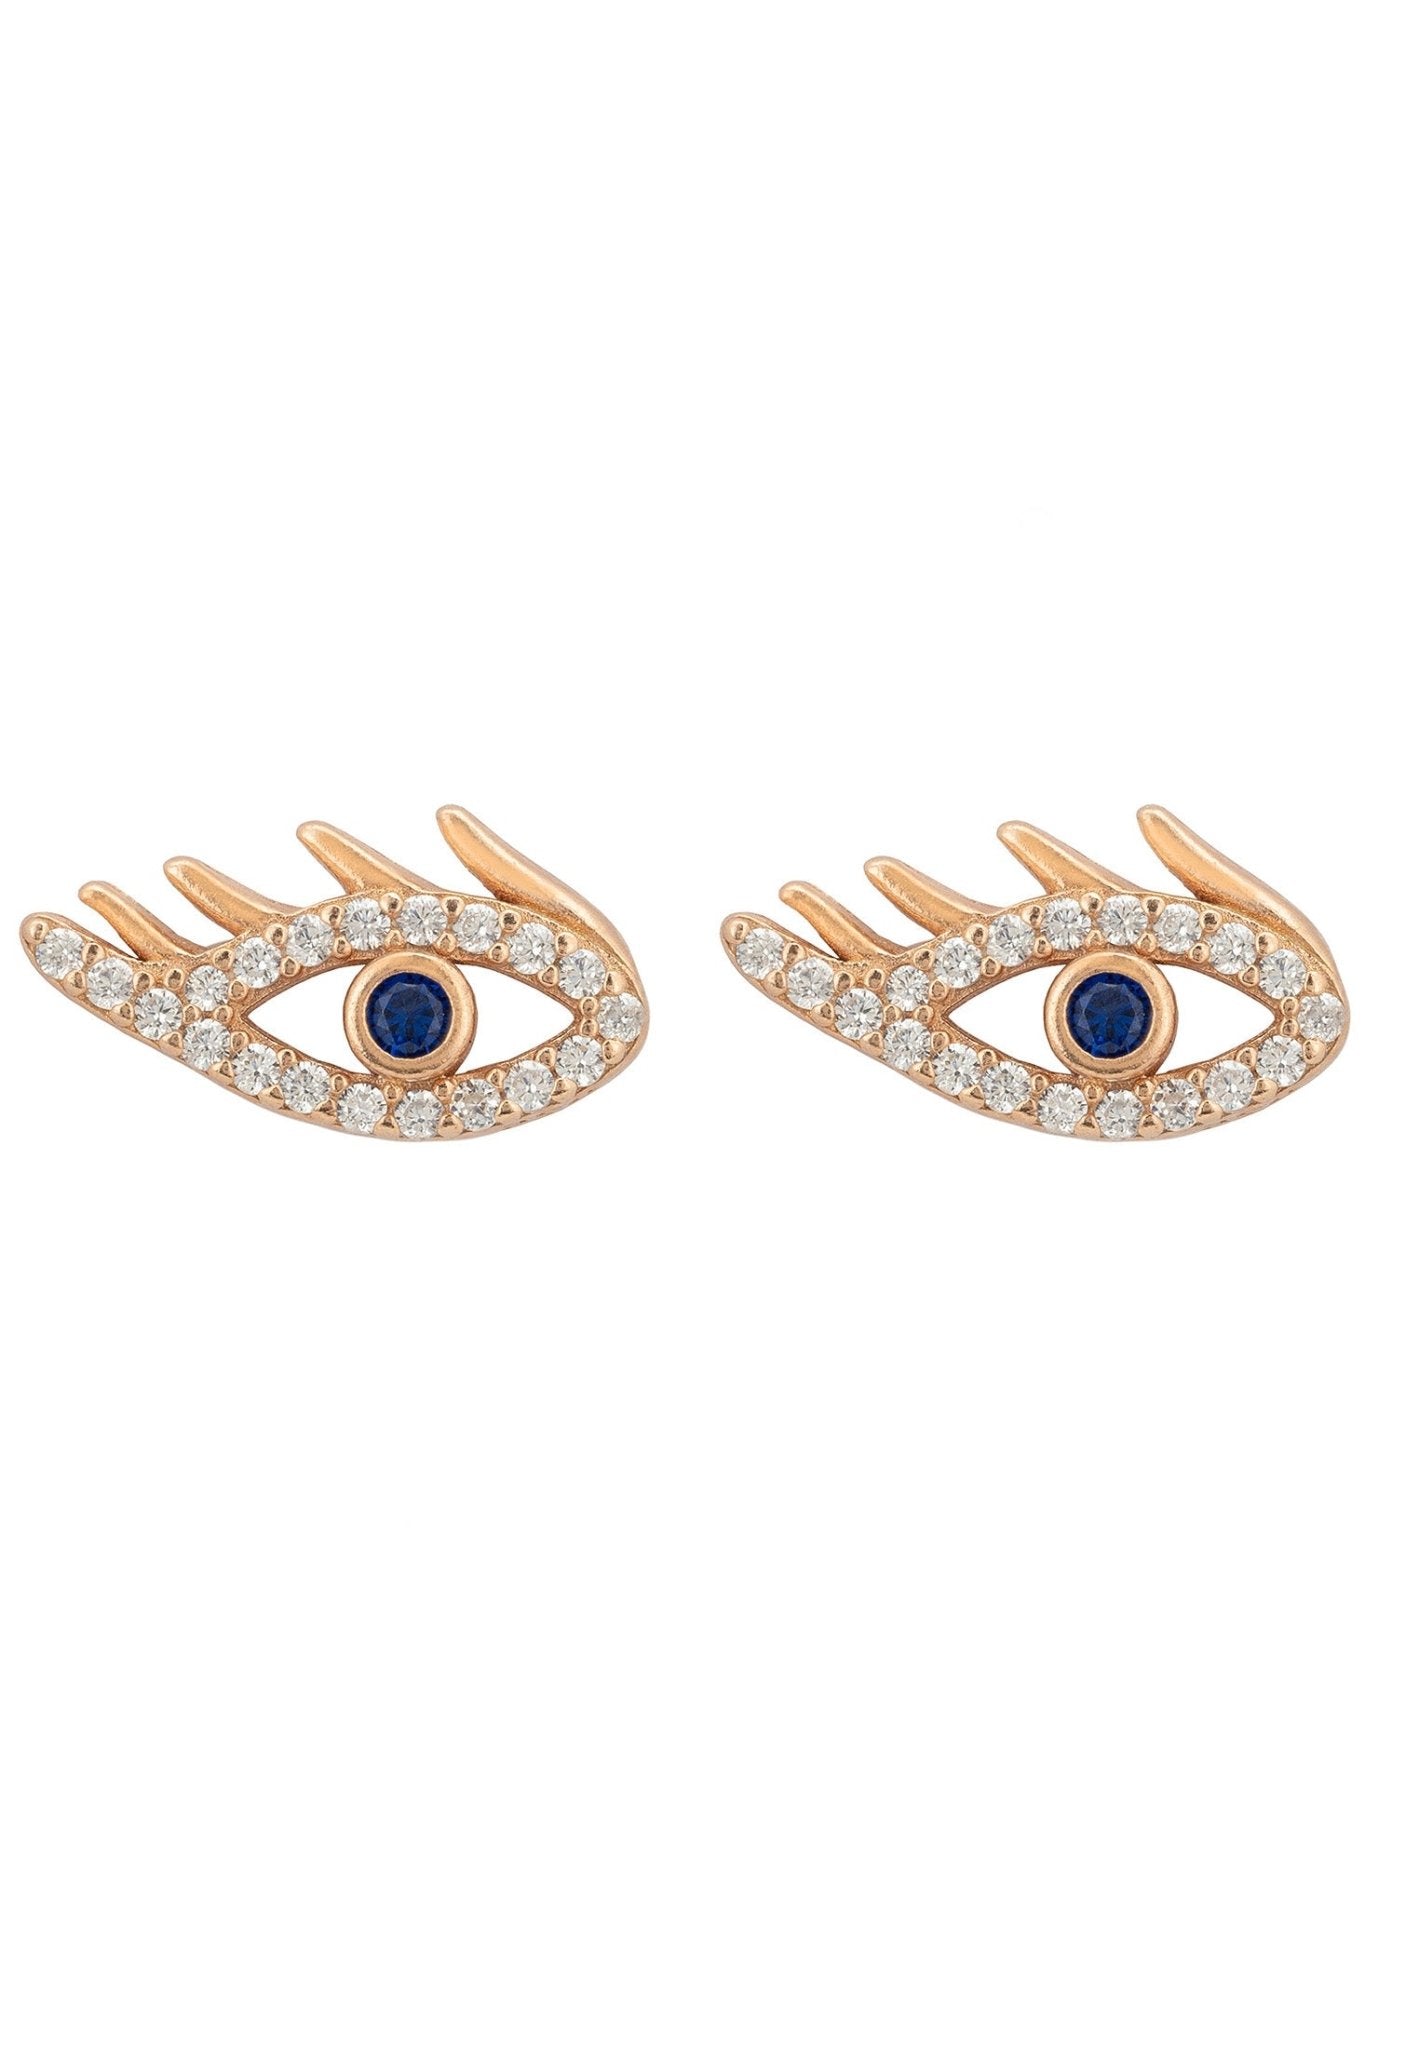 Eye Of Horus Stud Earrings Rosegold - LATELITA Earrings